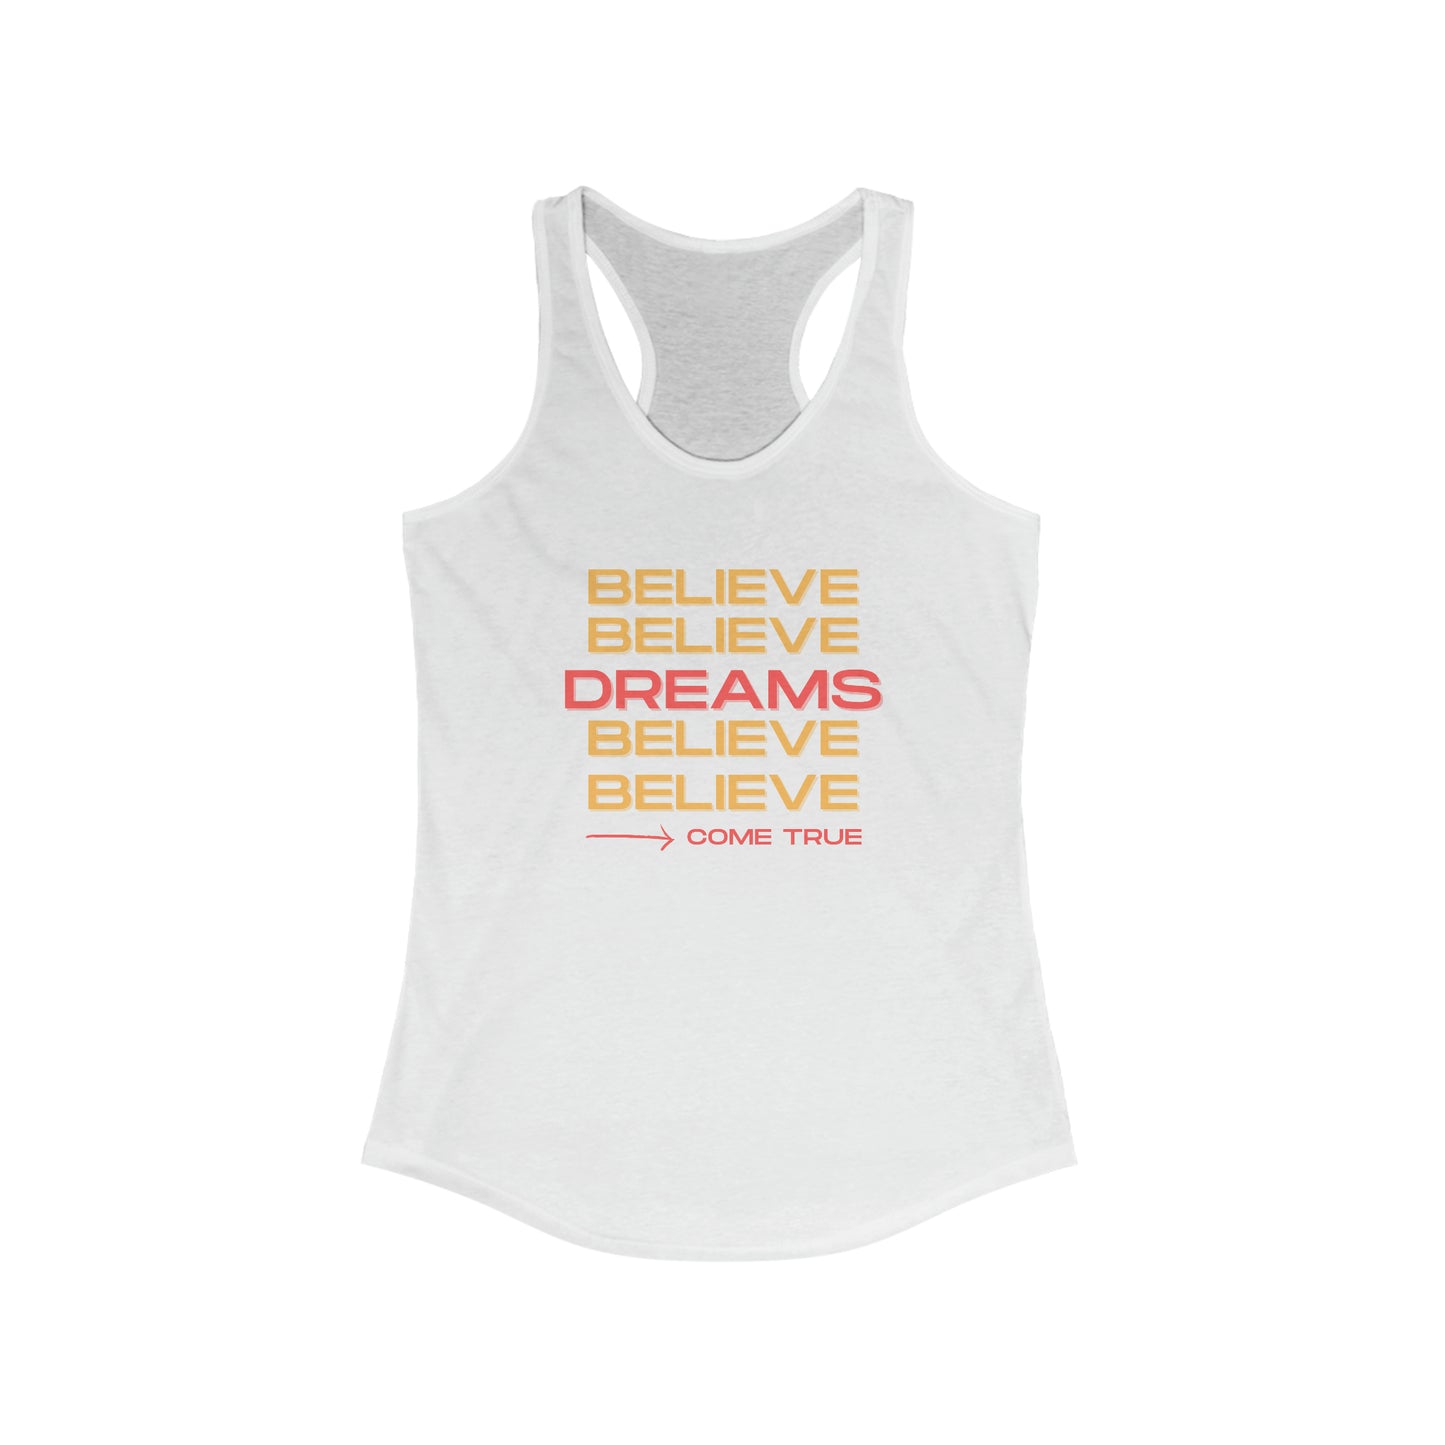 Believe in your dreams Motivational Tank Top